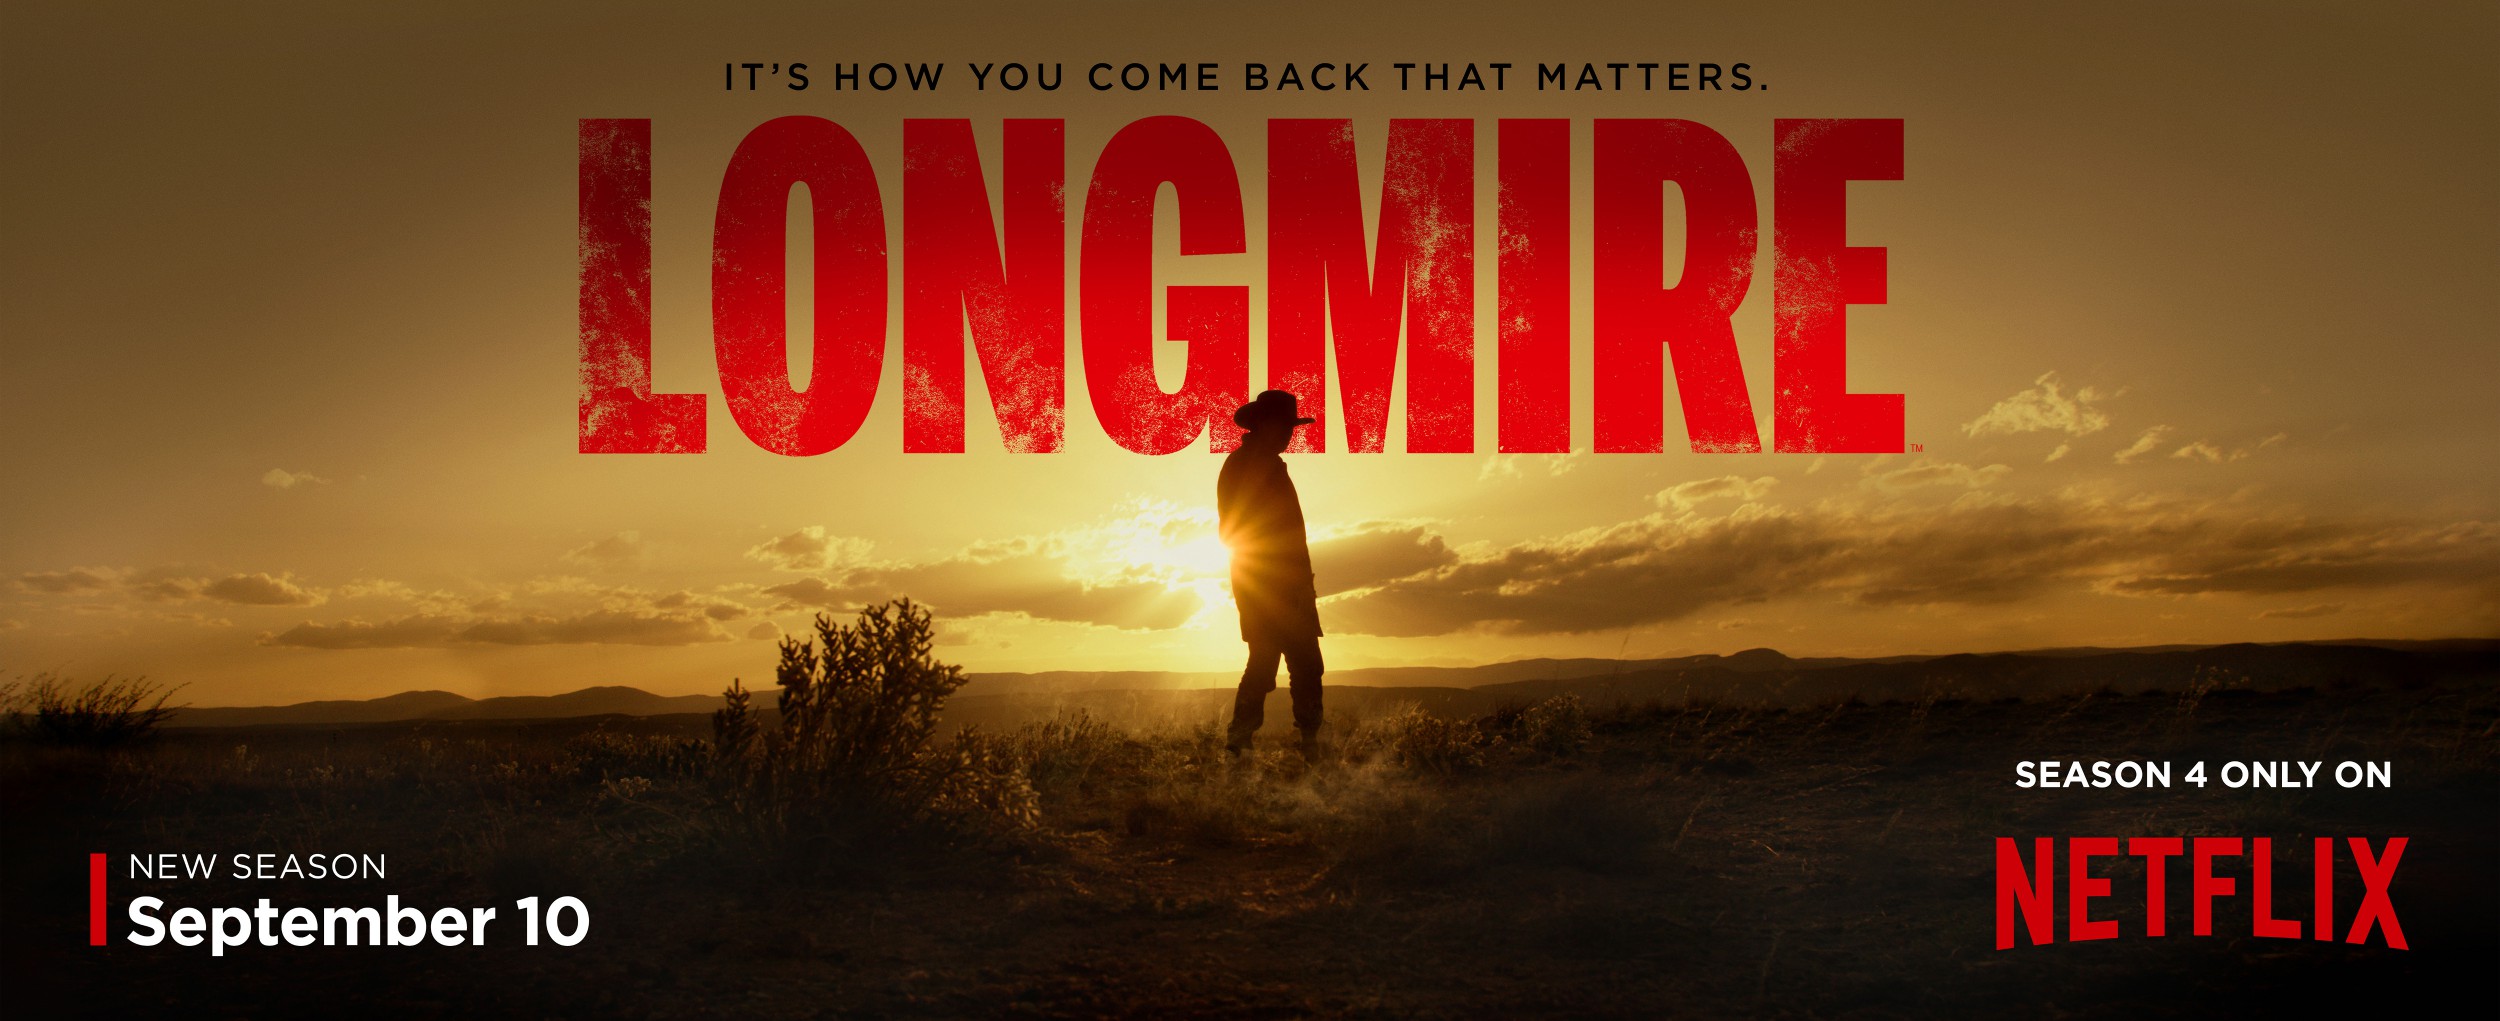 Mega Sized Movie Poster Image for Longmire (#7 of 8)